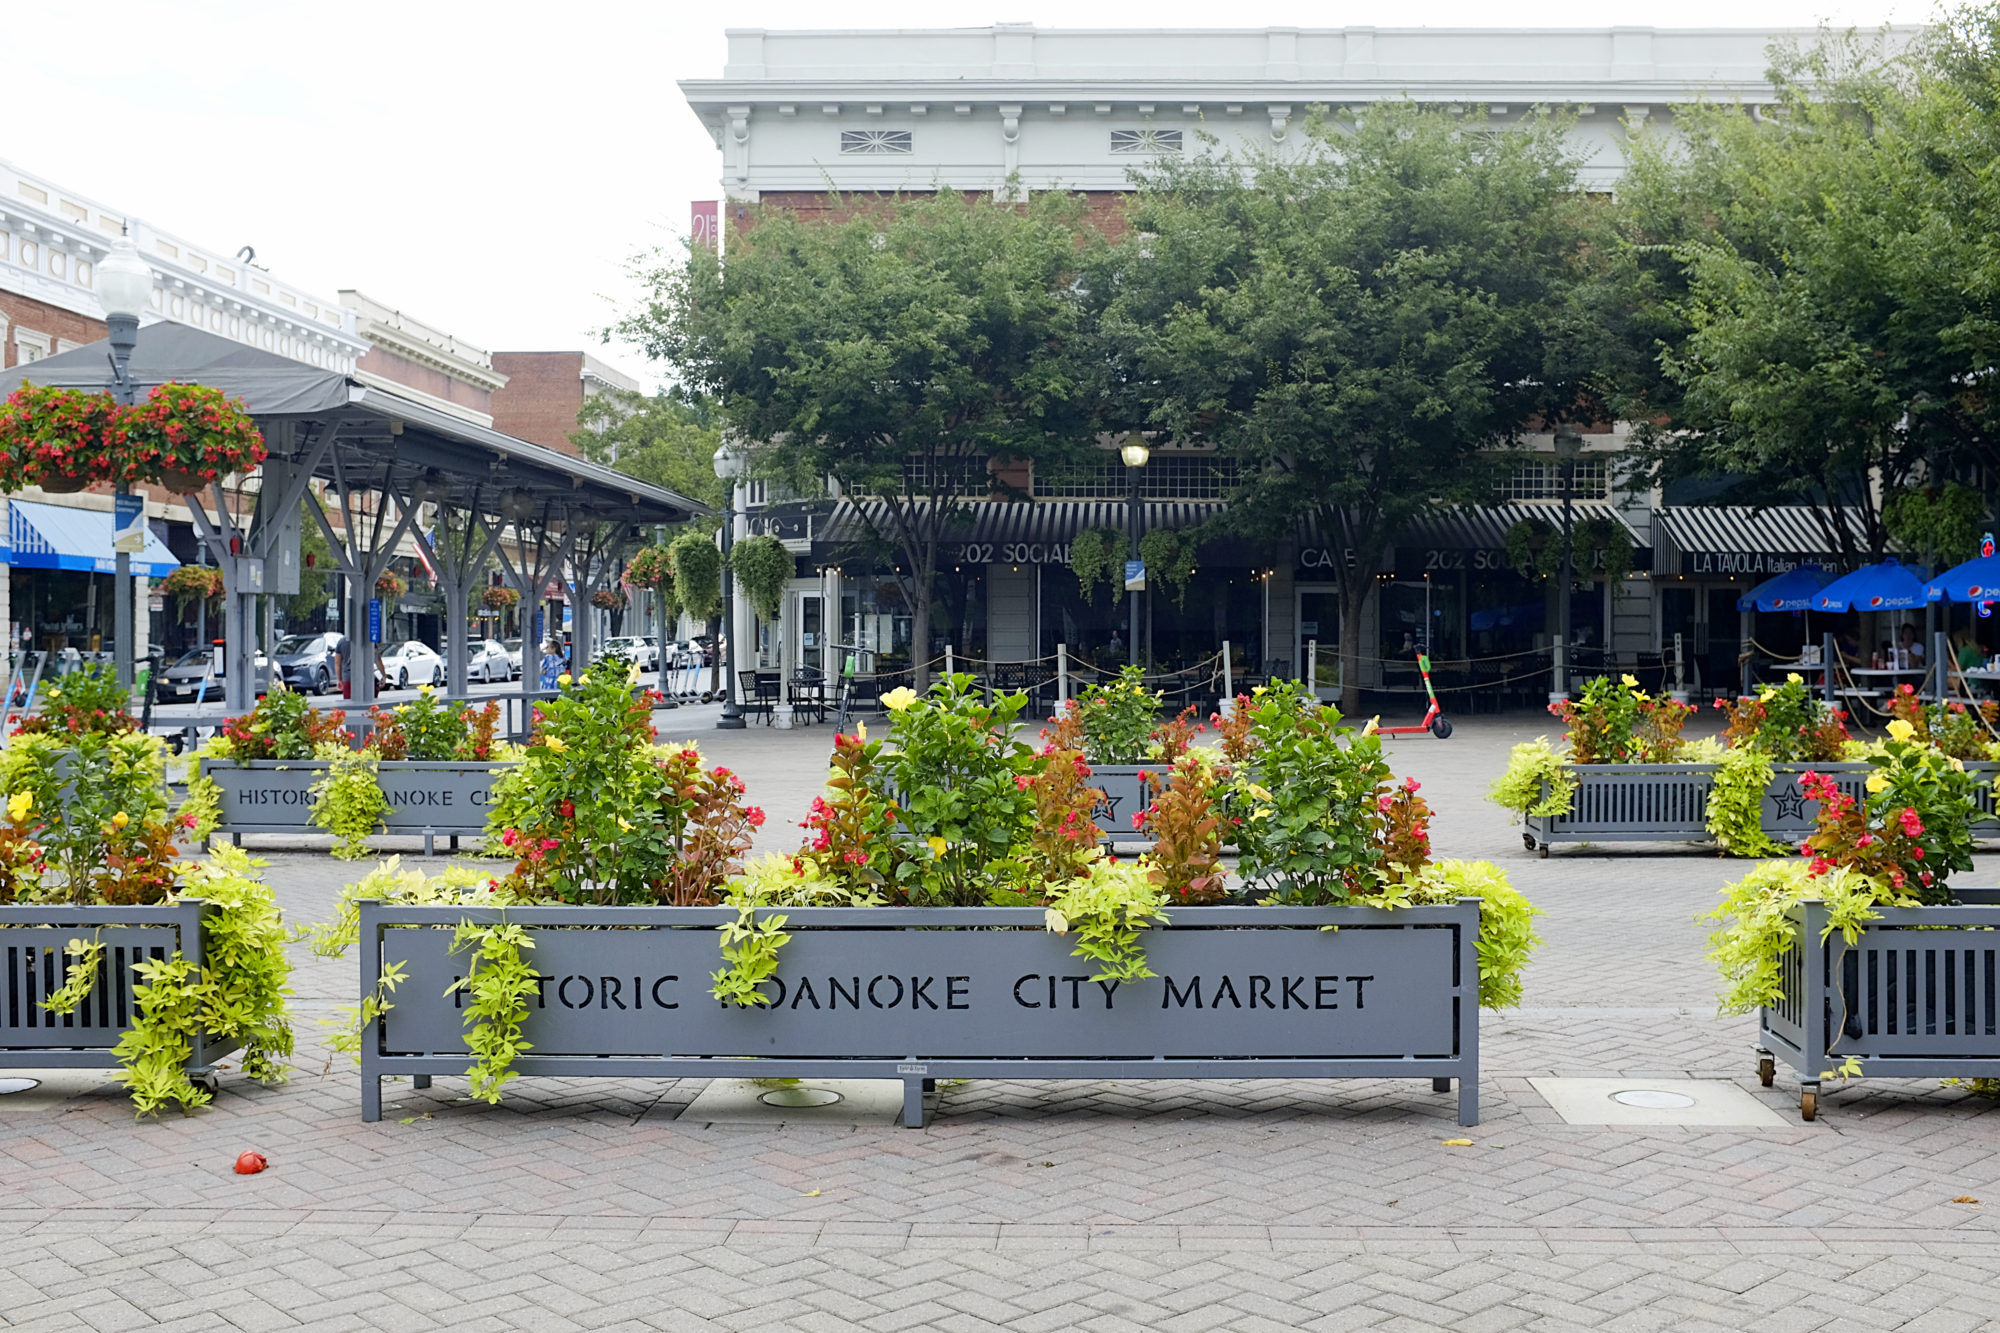 View of Roanoke City Market